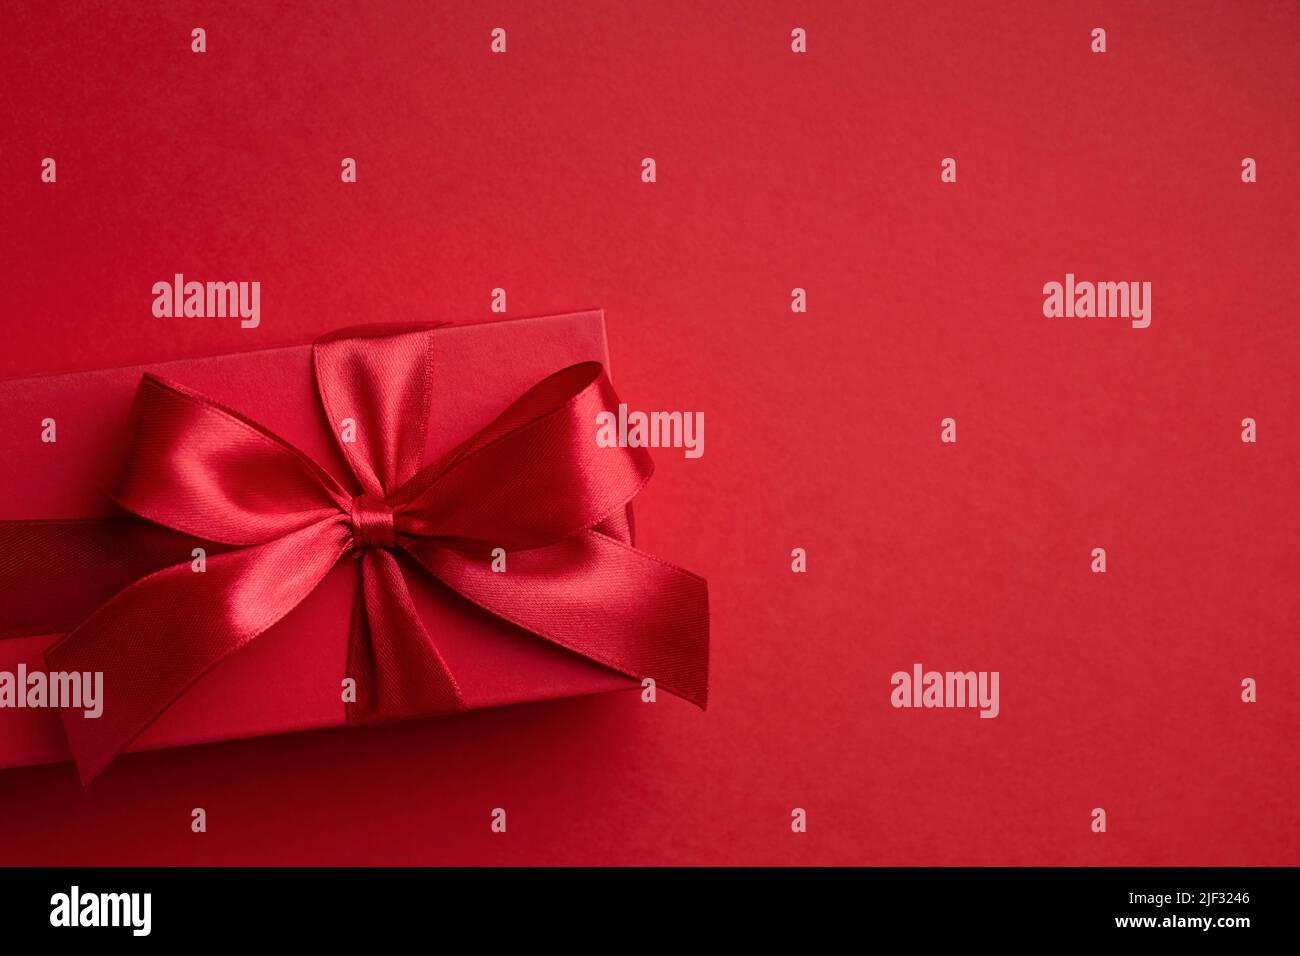 Caja de regalo roja con lazo rojo sobre fondo rojo para Navidad o San Valentín. Foto de stock